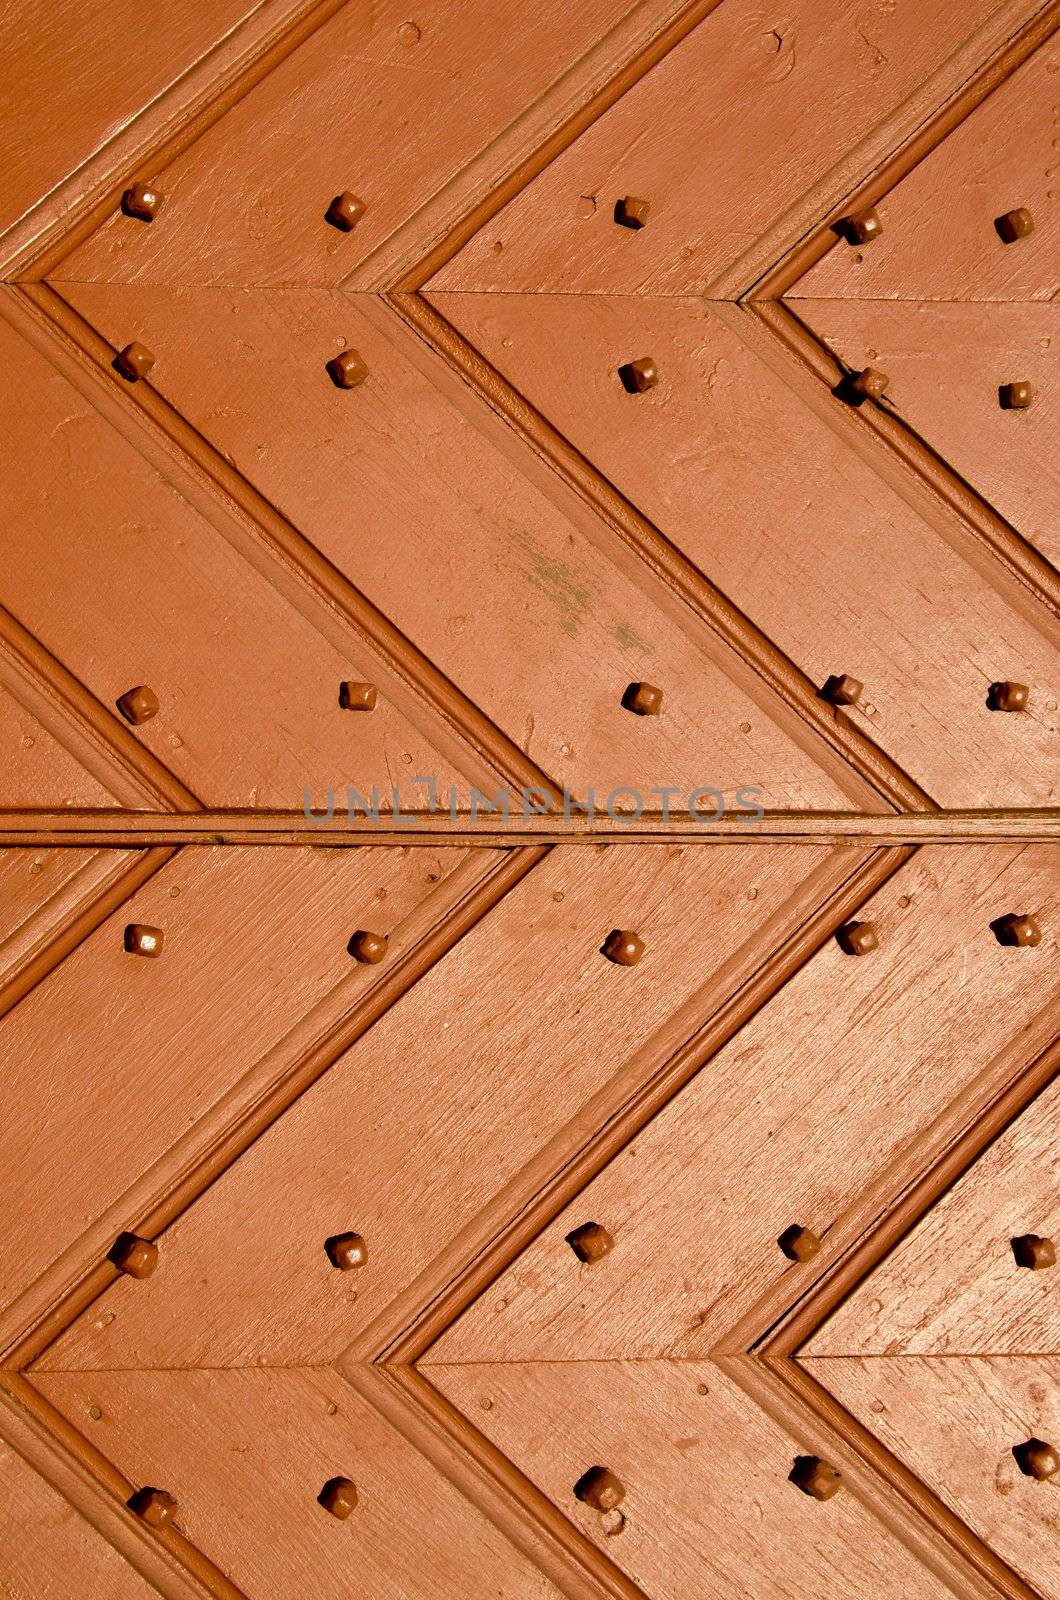 Antique wooden doors closeup and details. by sauletas